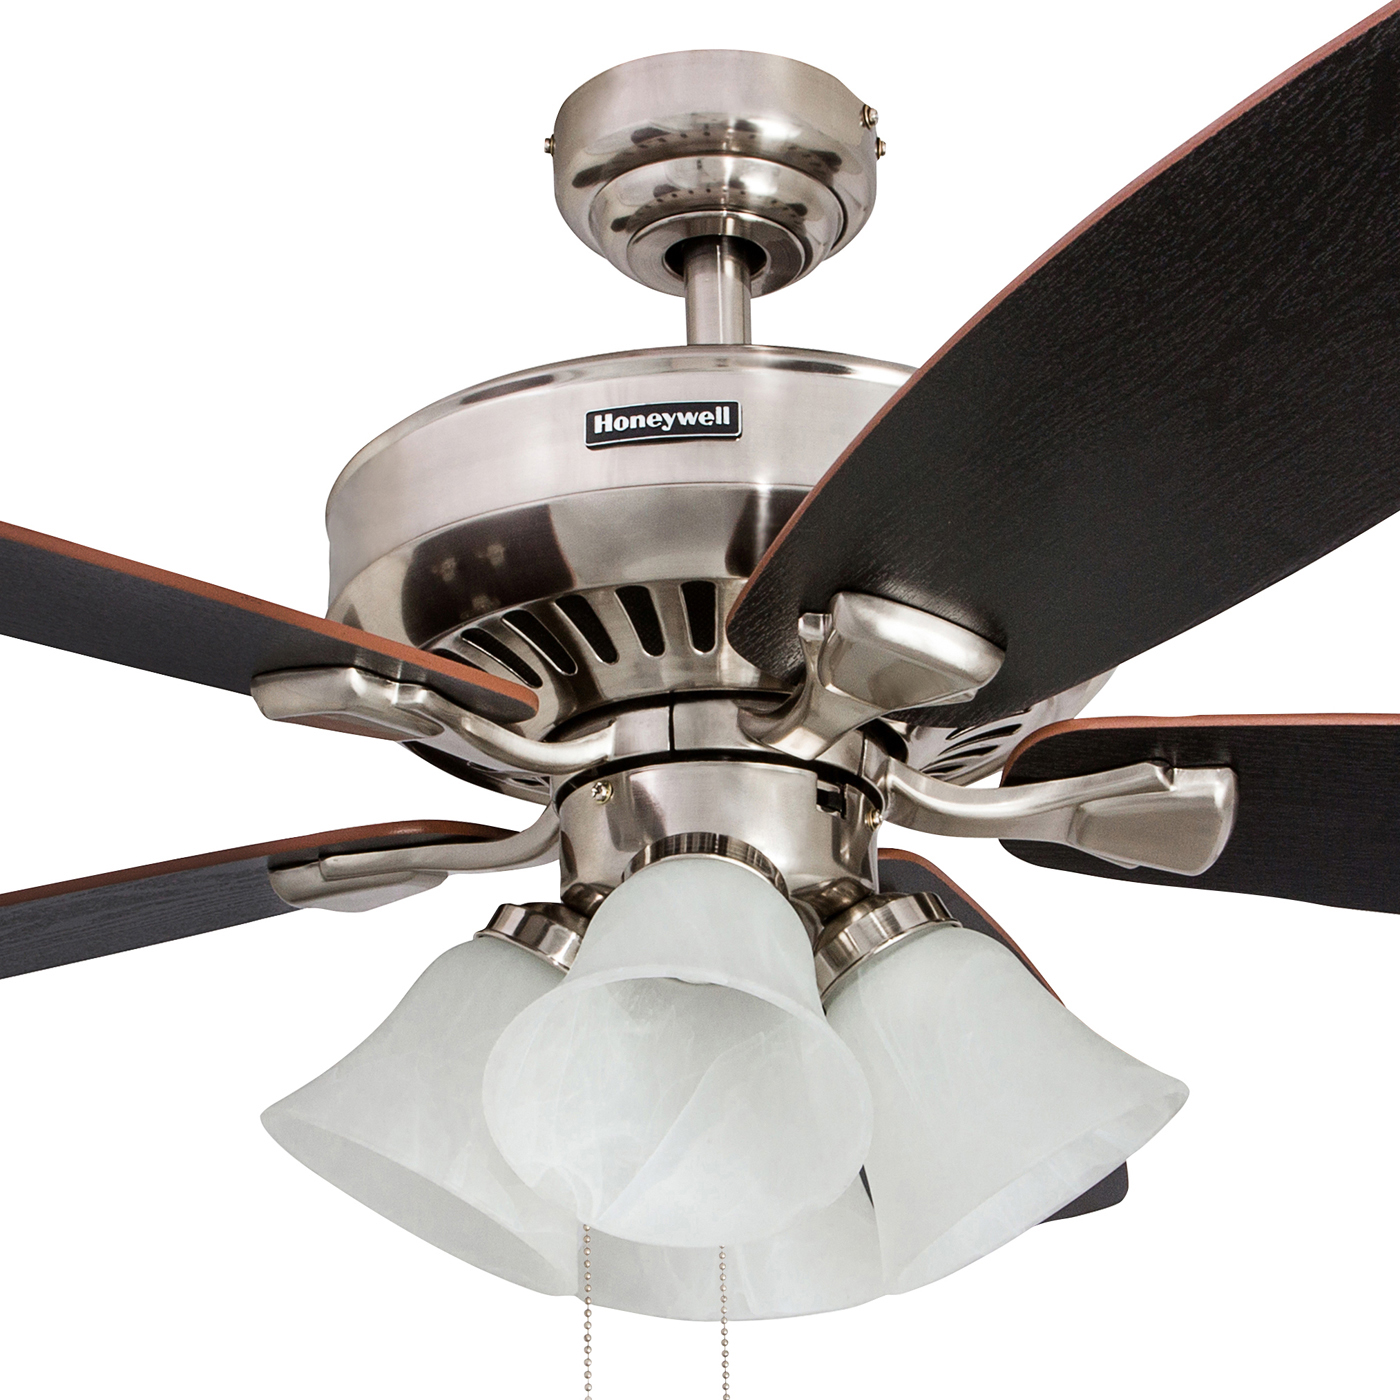 52" Honeywell Hamilton Ceiling Fan, Brushed Nickel - image 2 of 4